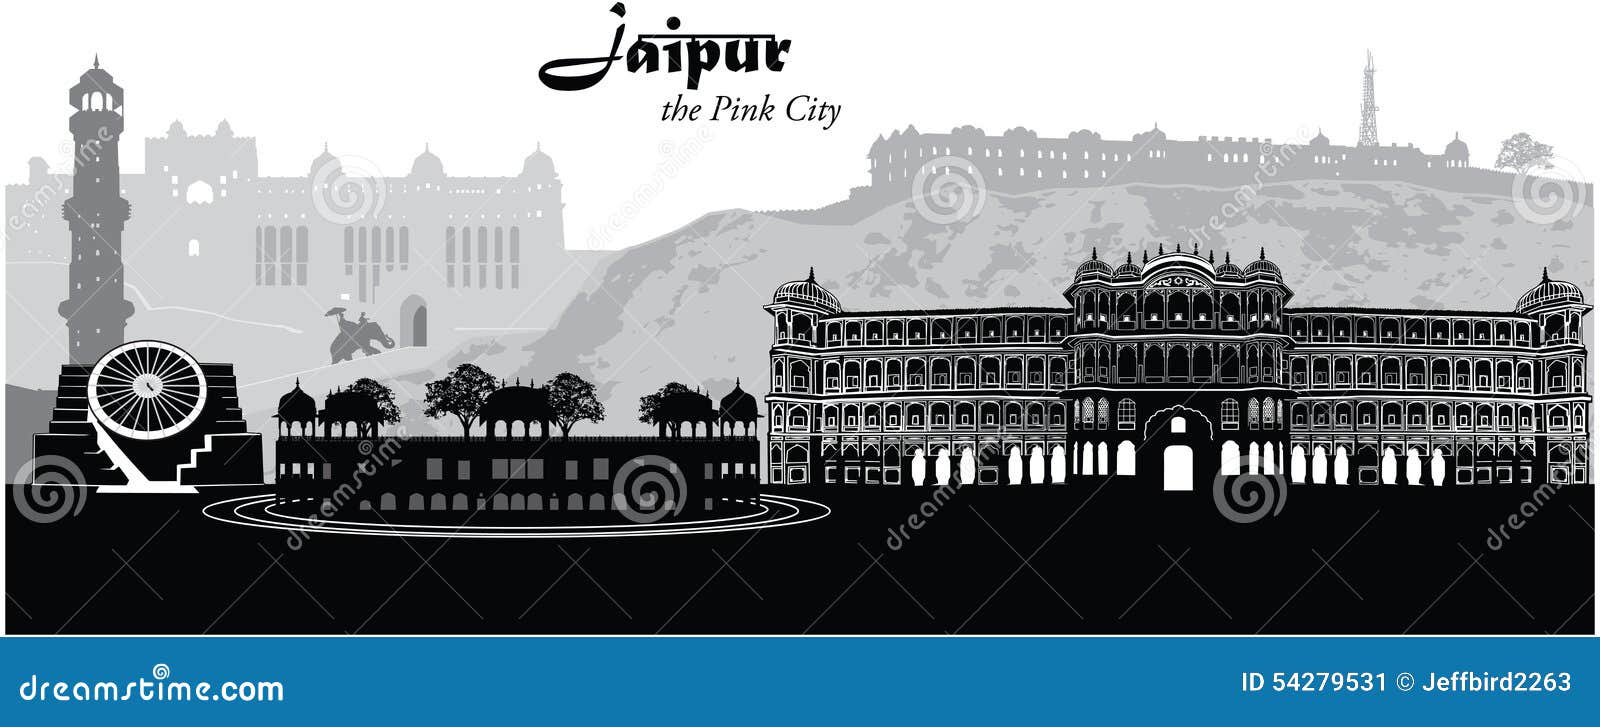 jaipur cityscape